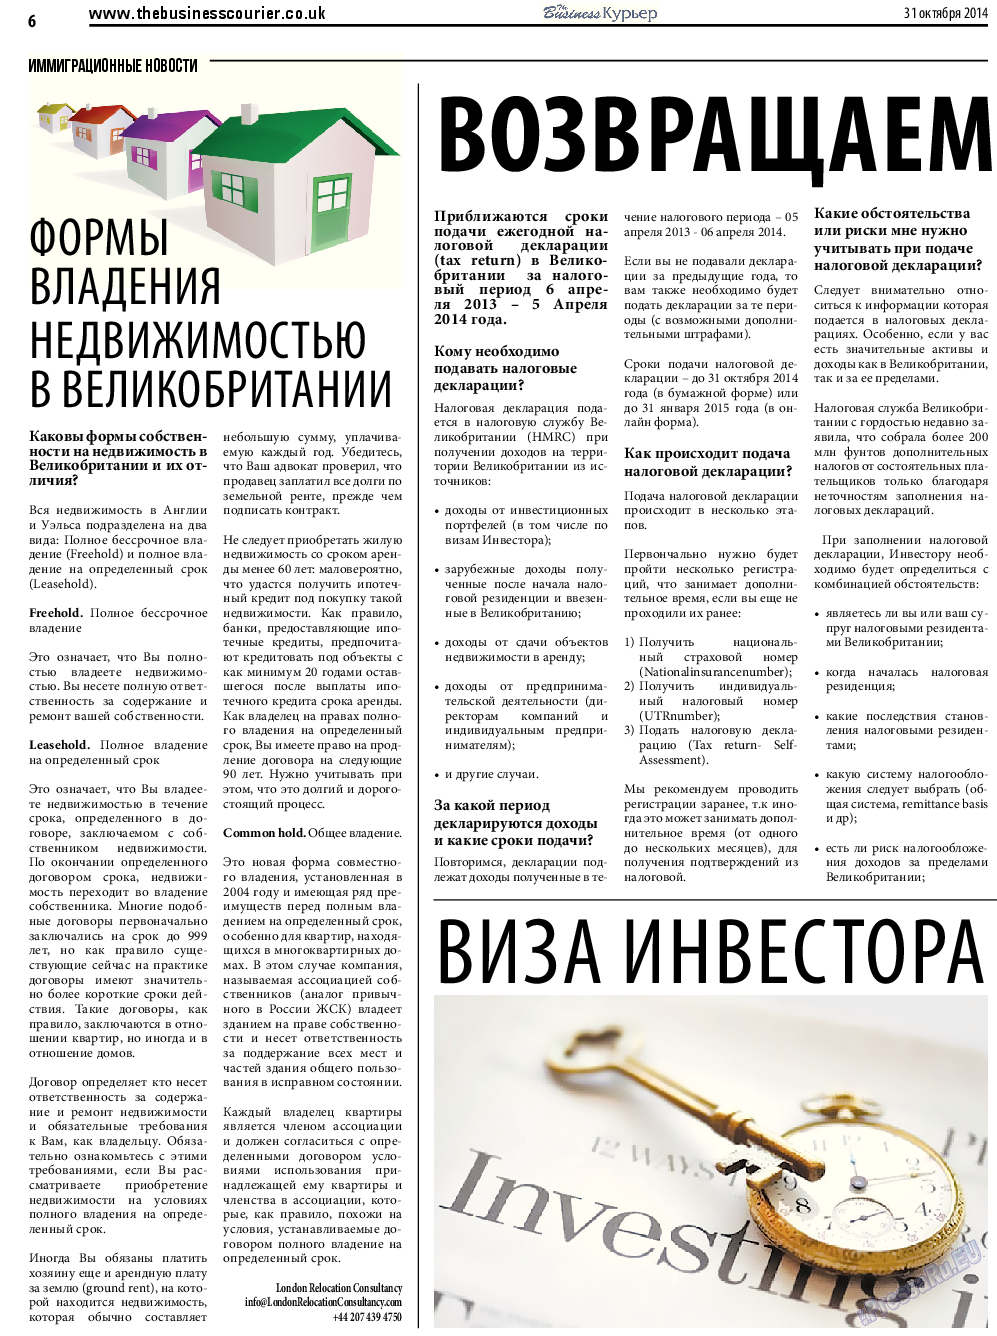 The Business Курьер, газета. 2014 №26 стр.6